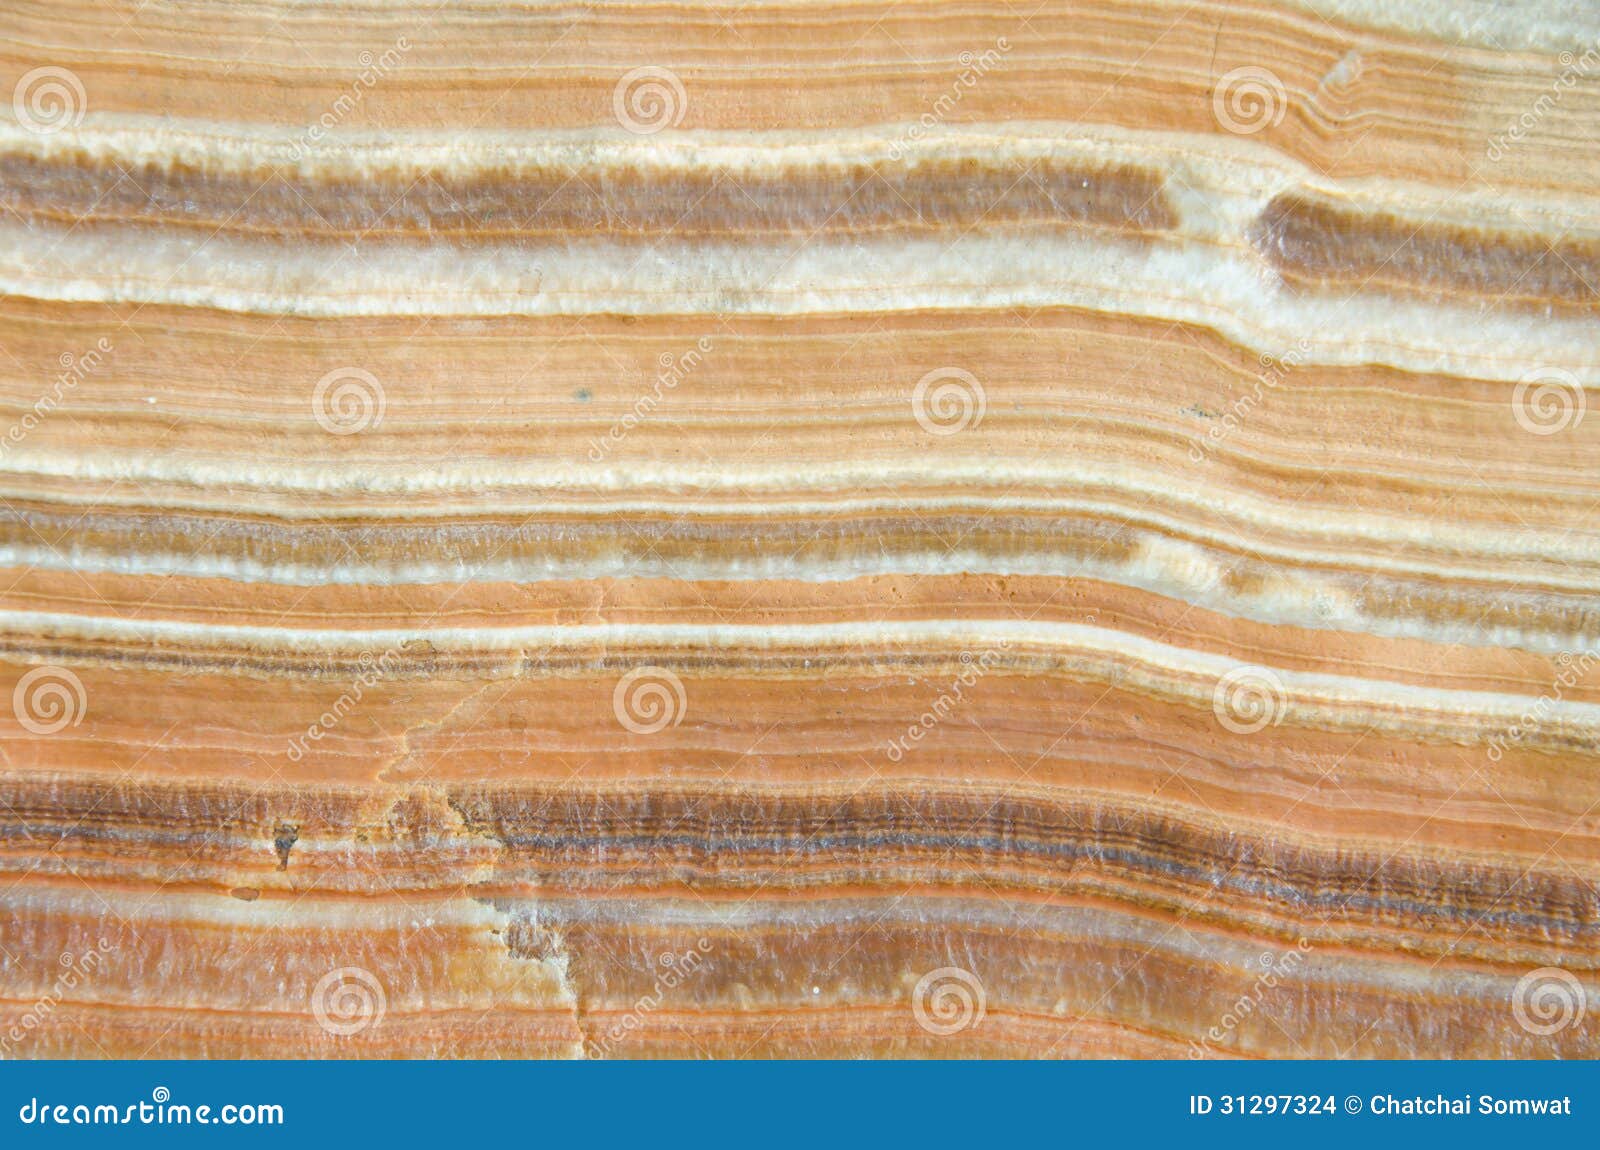 texture of sedimentary rock